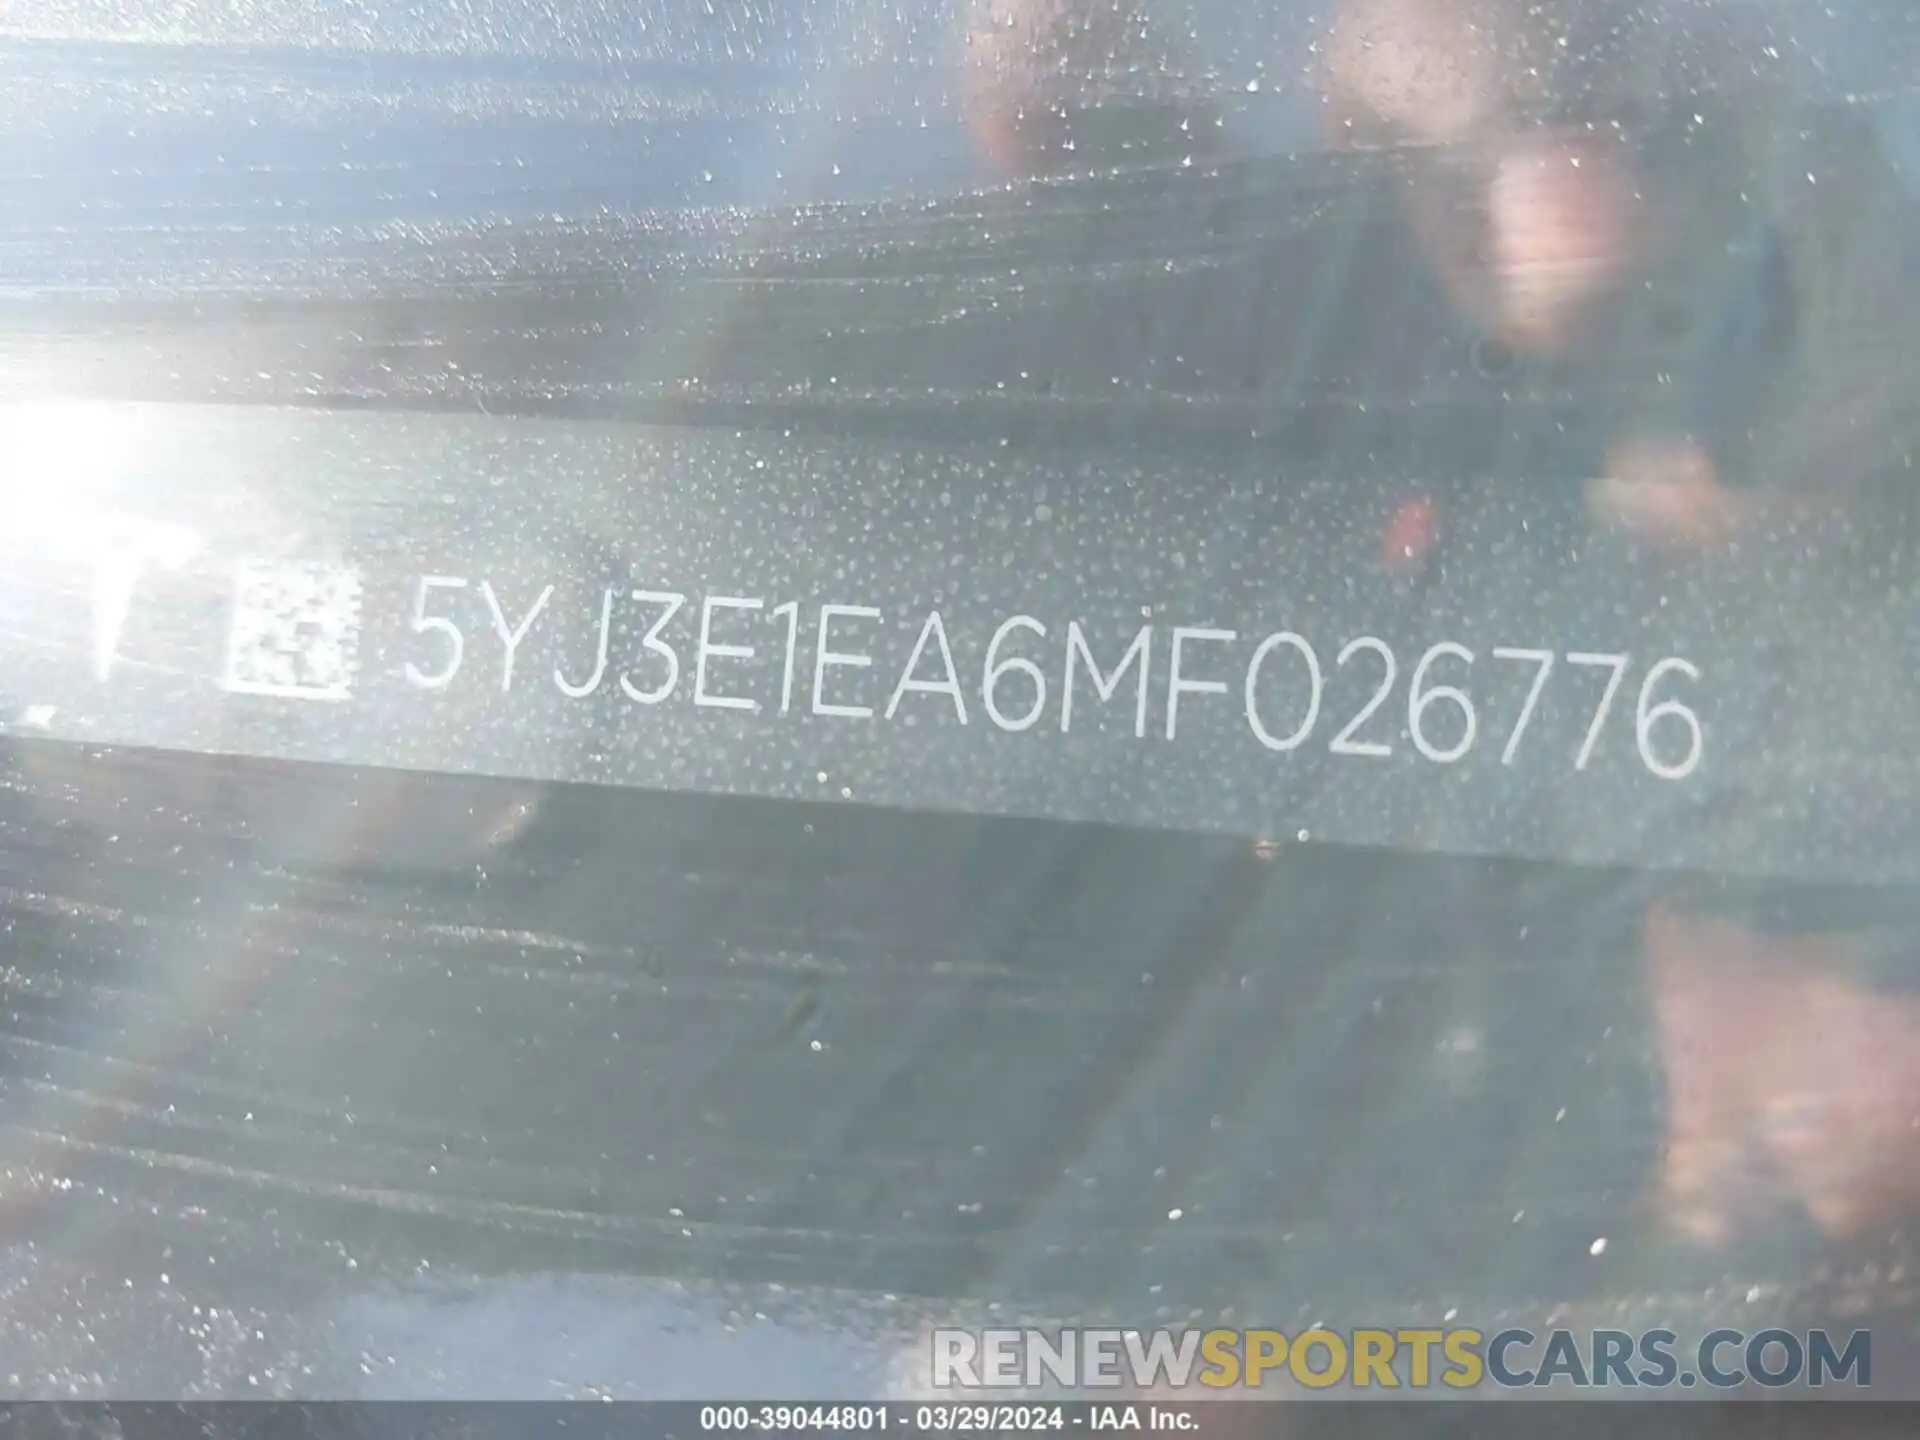 9 Photograph of a damaged car 5YJ3E1EA6MF026776 TESLA MODEL 3 2021